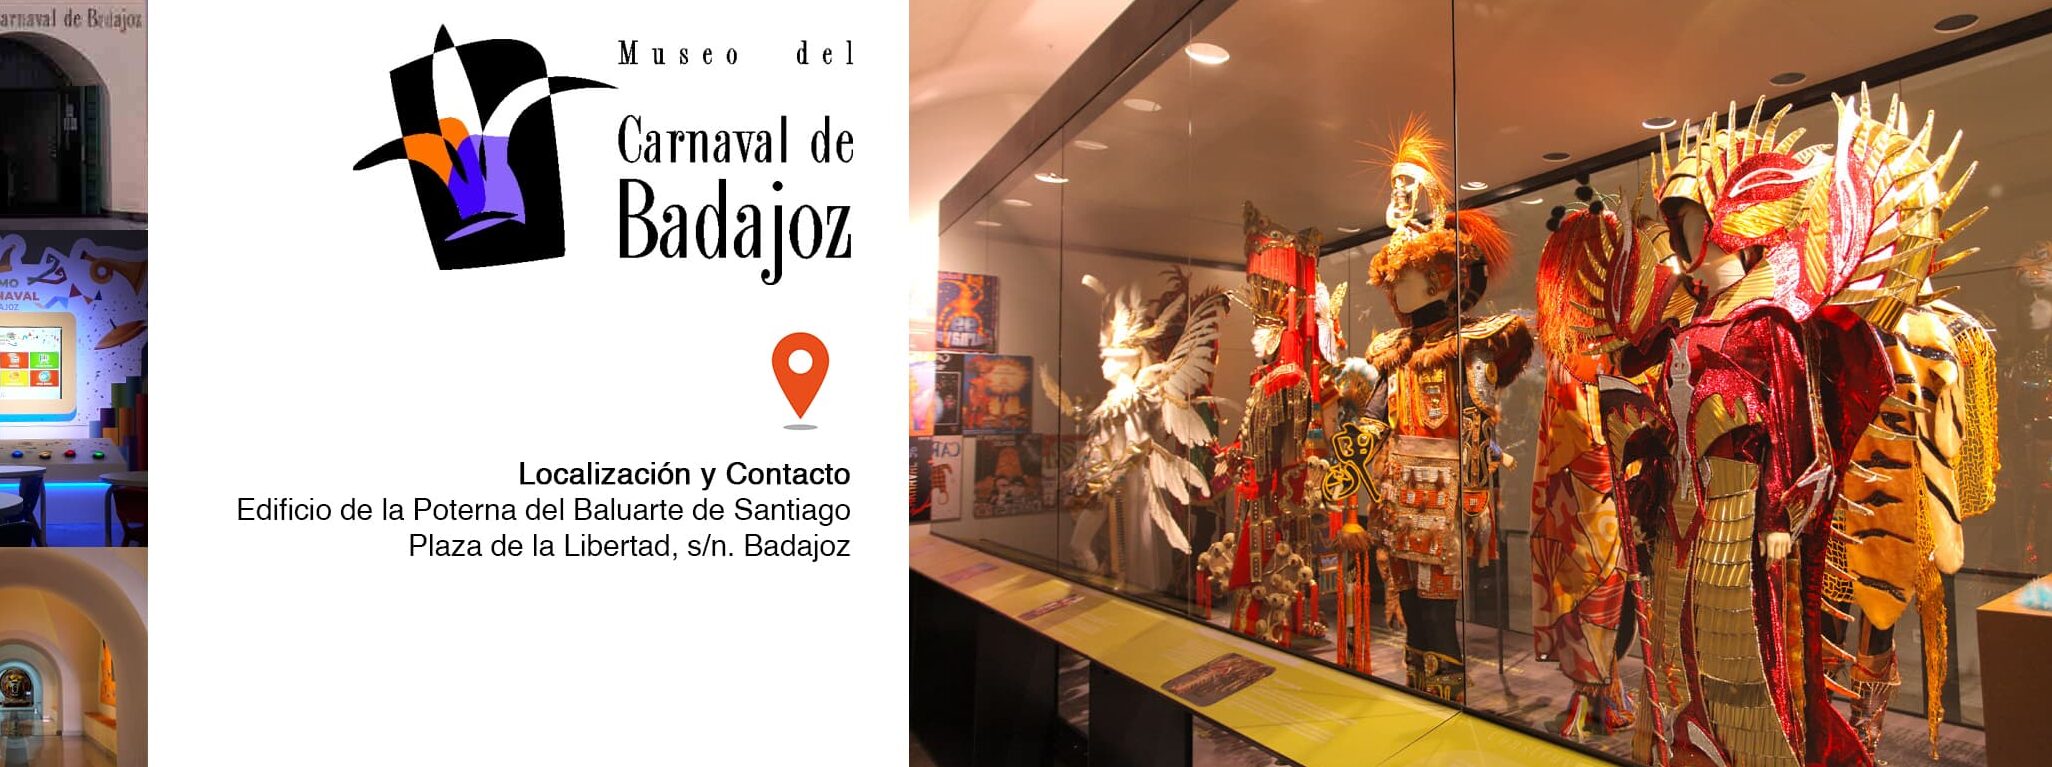 MUSEO DEL CARNAVAL DE BADAJOZ		Badajoz	Badajoz	Museo